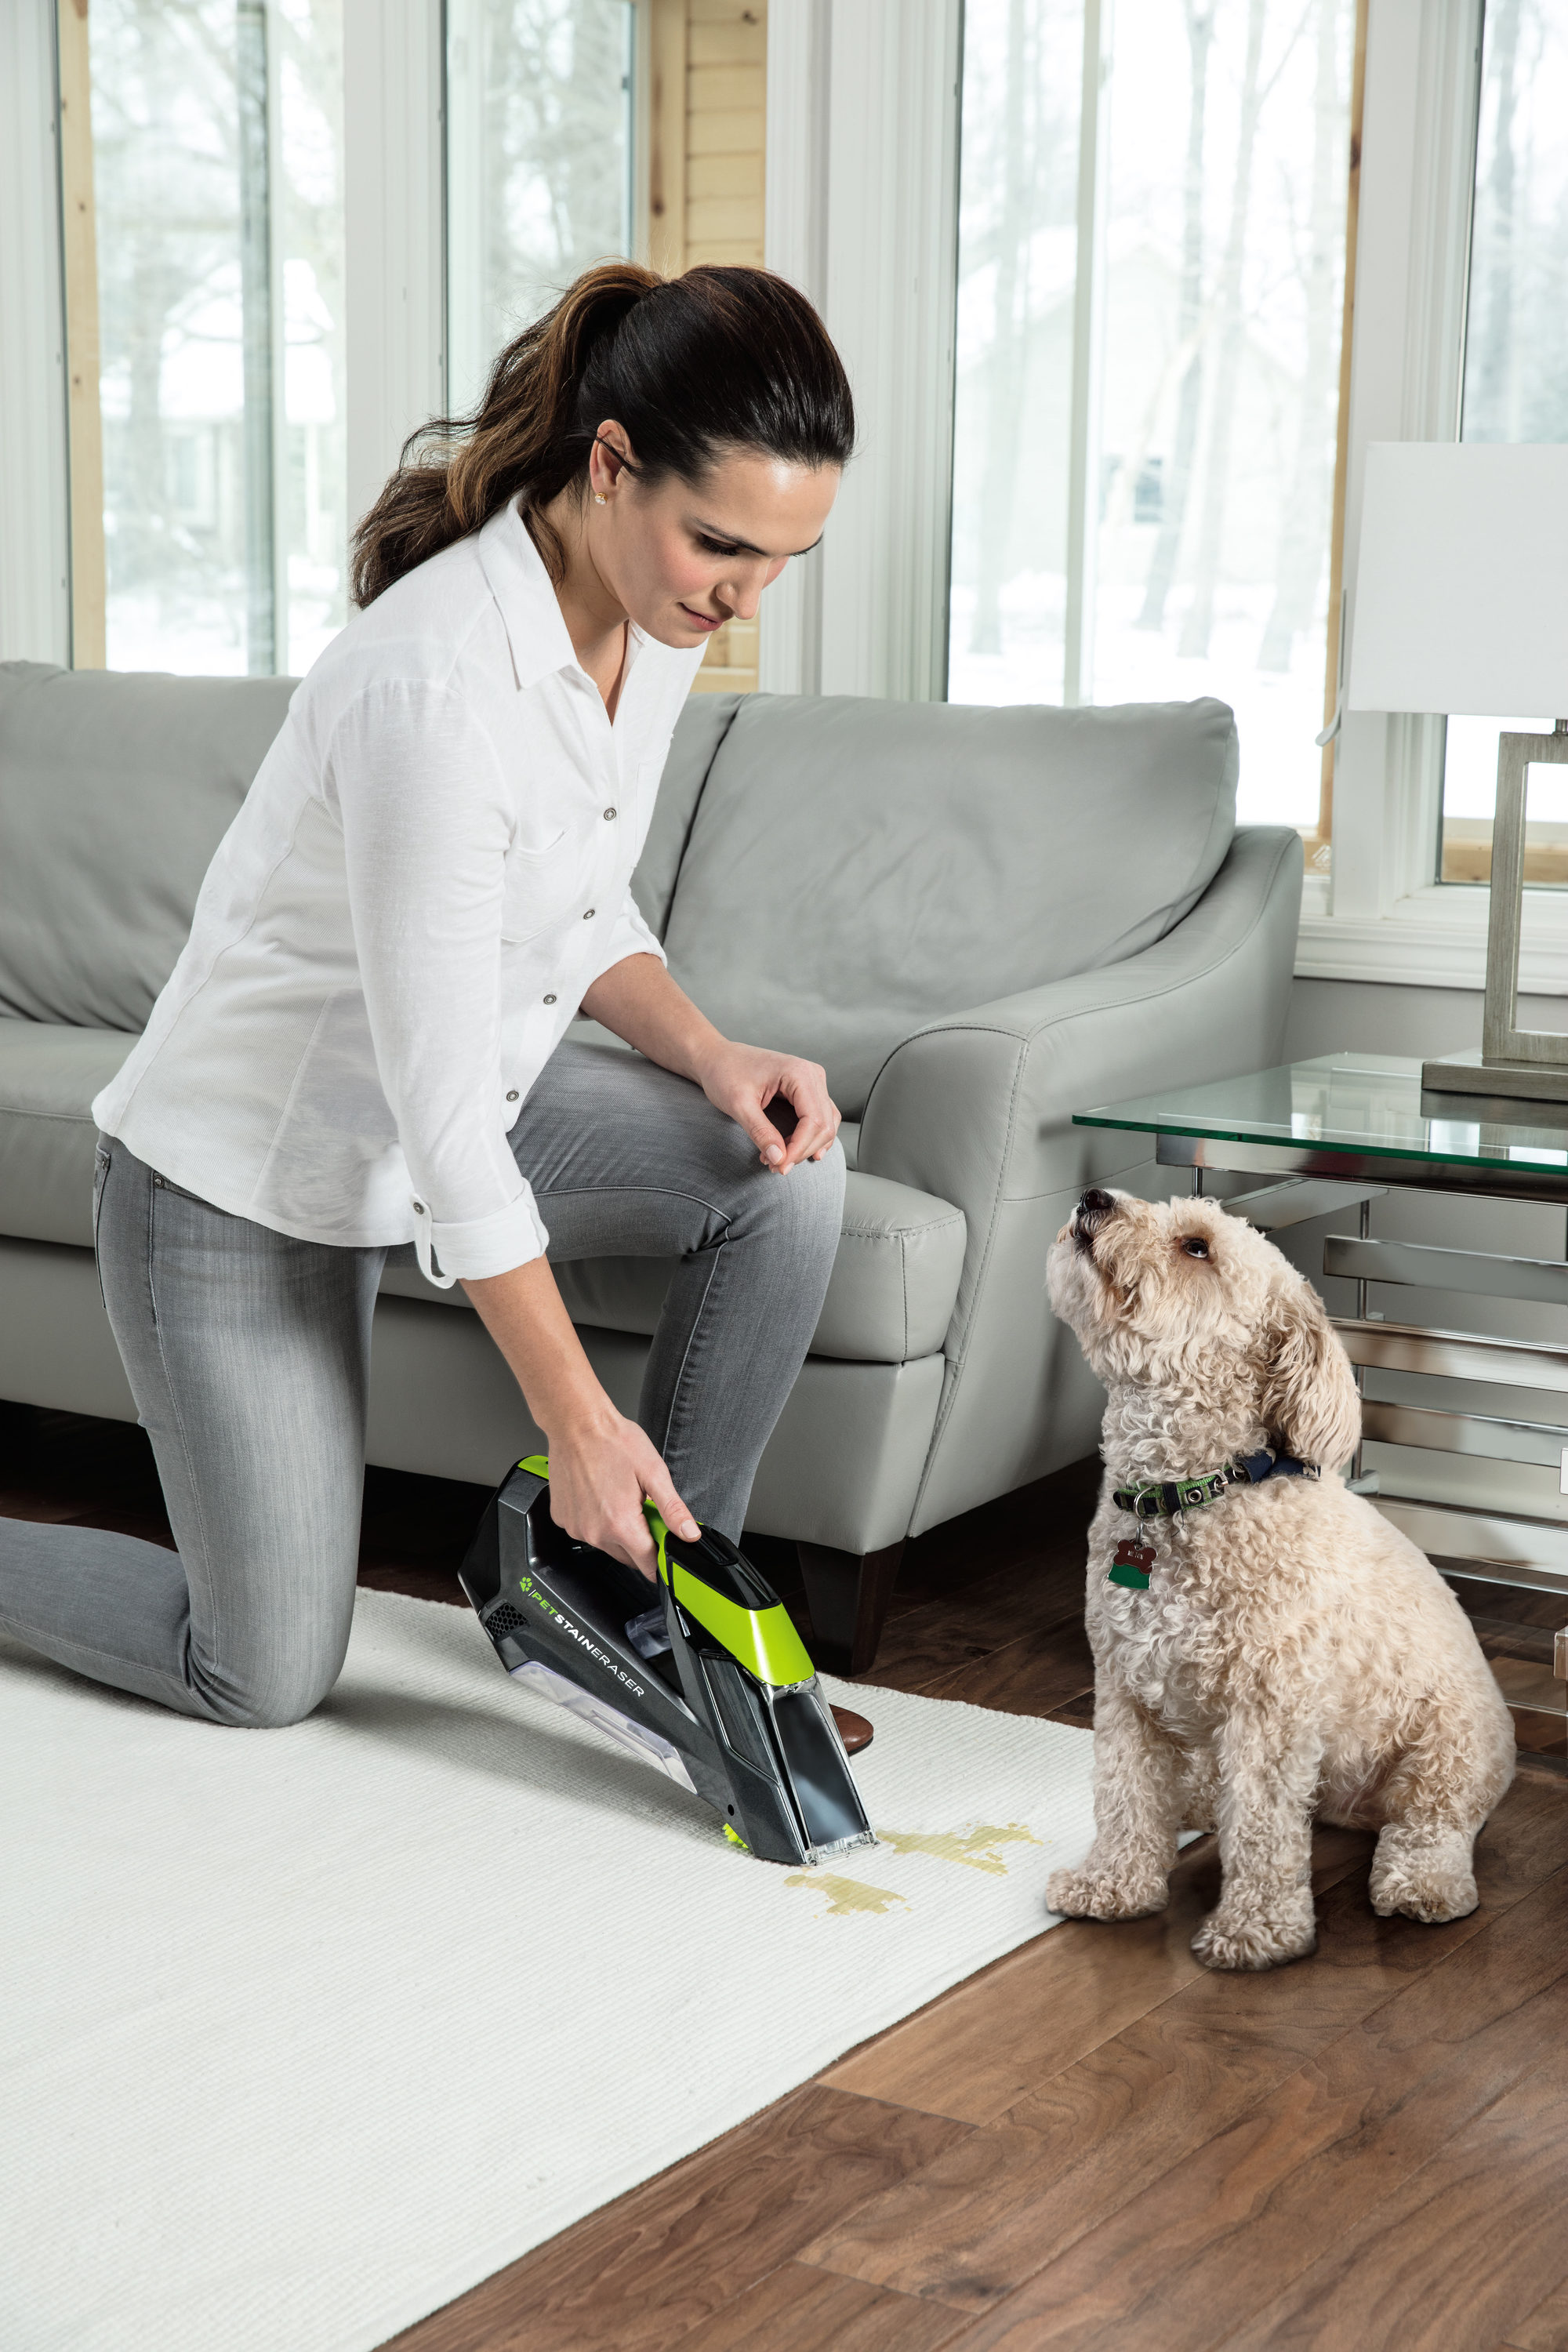 Pet cleaning. Bissell Cleaner Pet. Bissell Carpet and Upholstery Cleaner. Моющий пылесос Pet. Пылесос для собак.